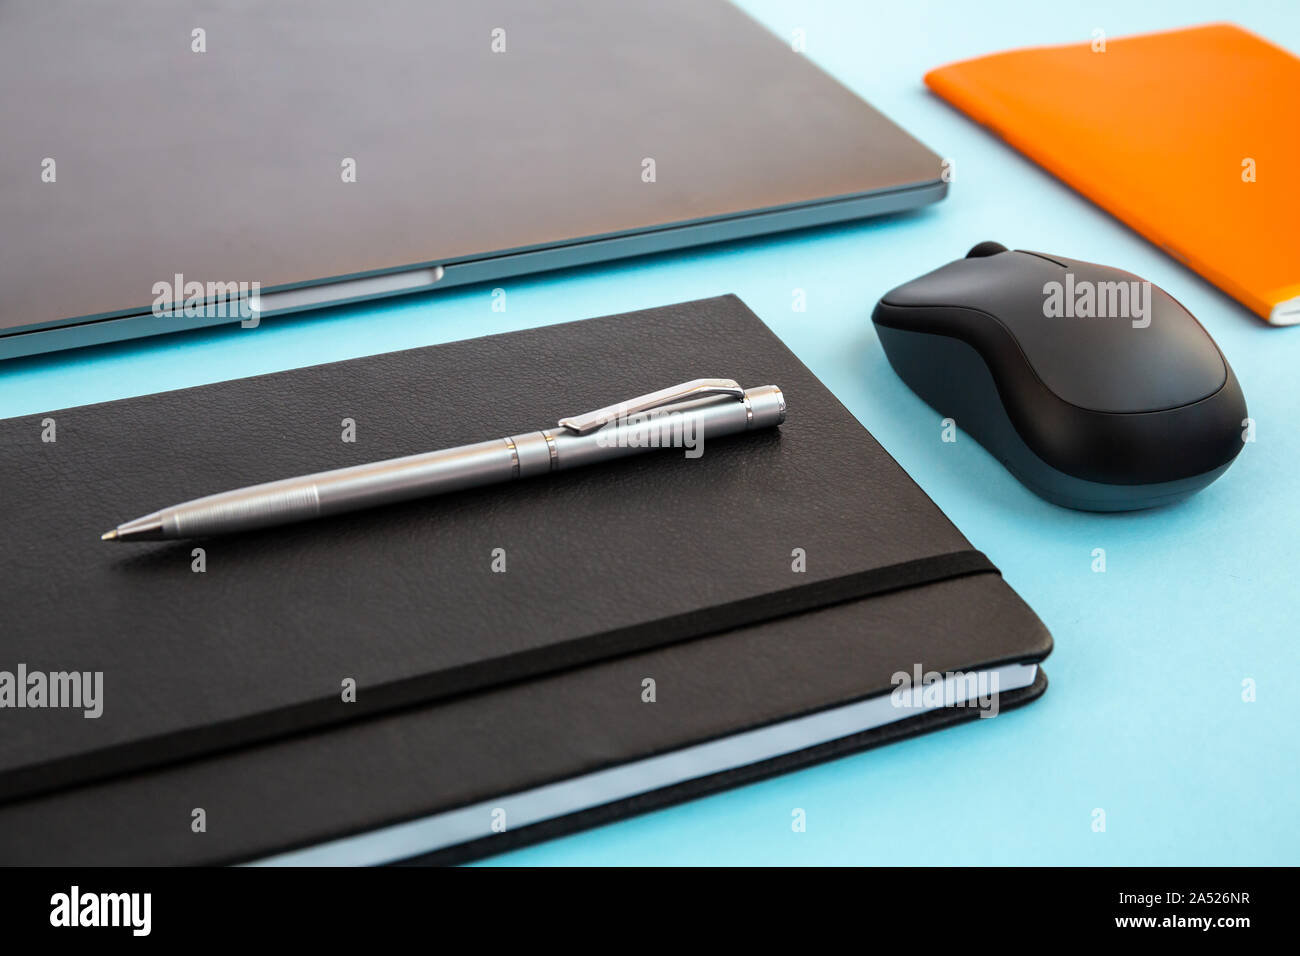 Desk with laptop, notebook, agenda, pen, bluetooth mouse, orange notebook. Office mock up, empty document. Stock Photo